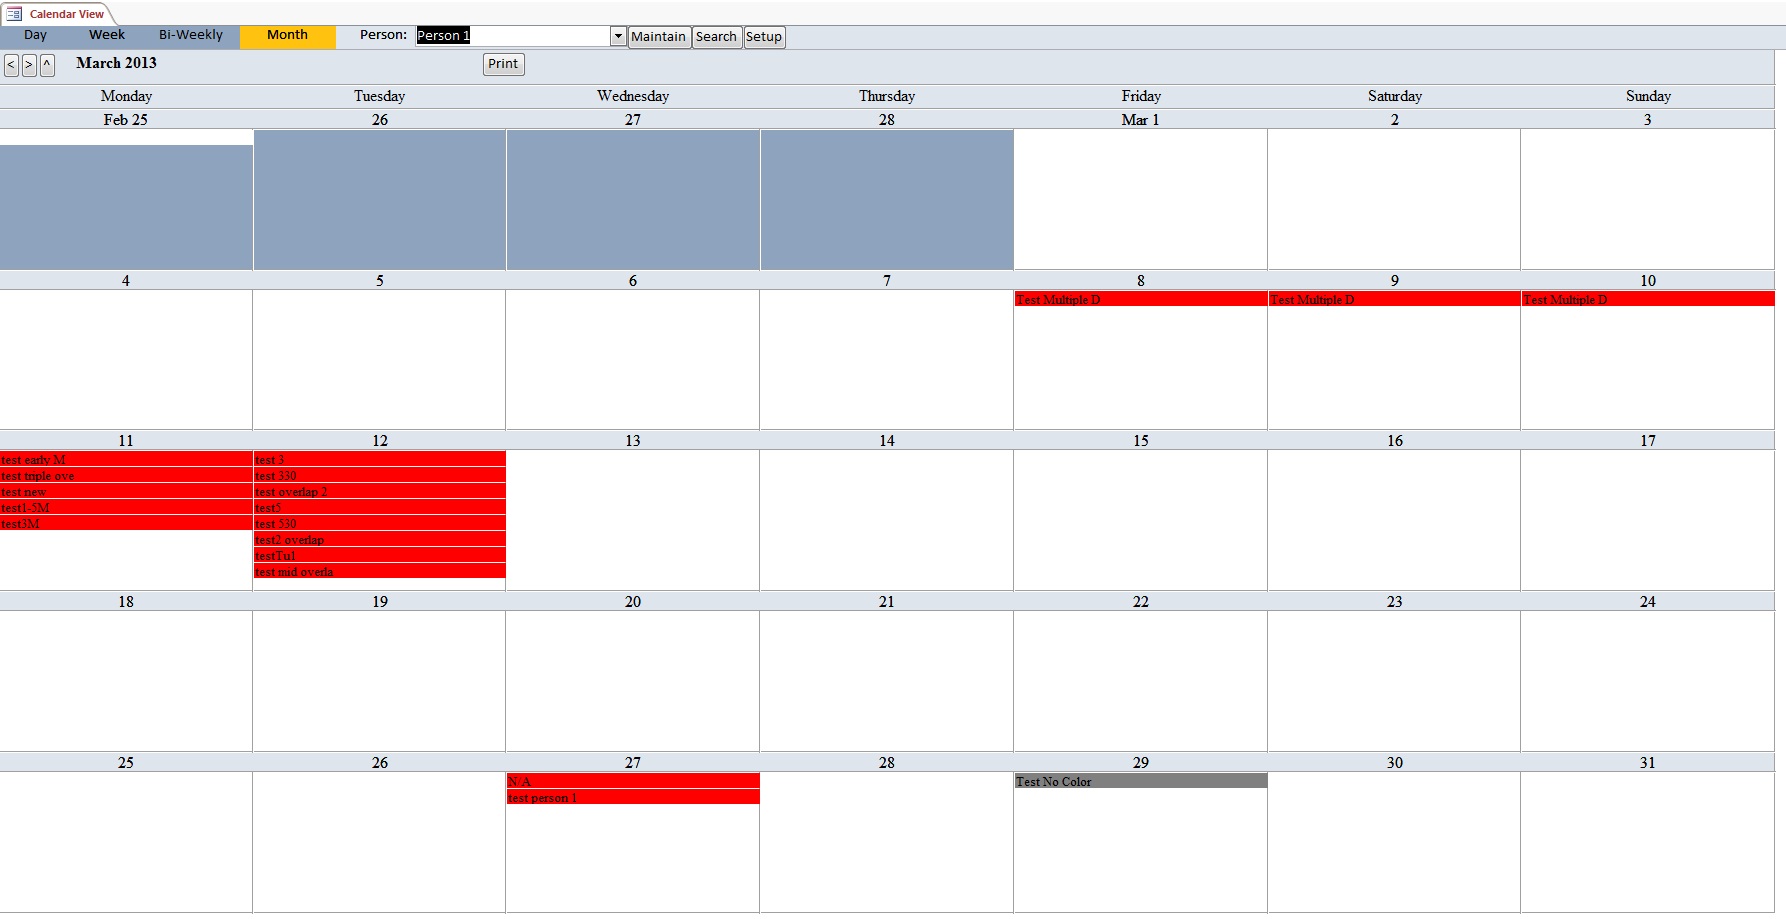 Church Calendar Scheduling Template | Scheduling Database